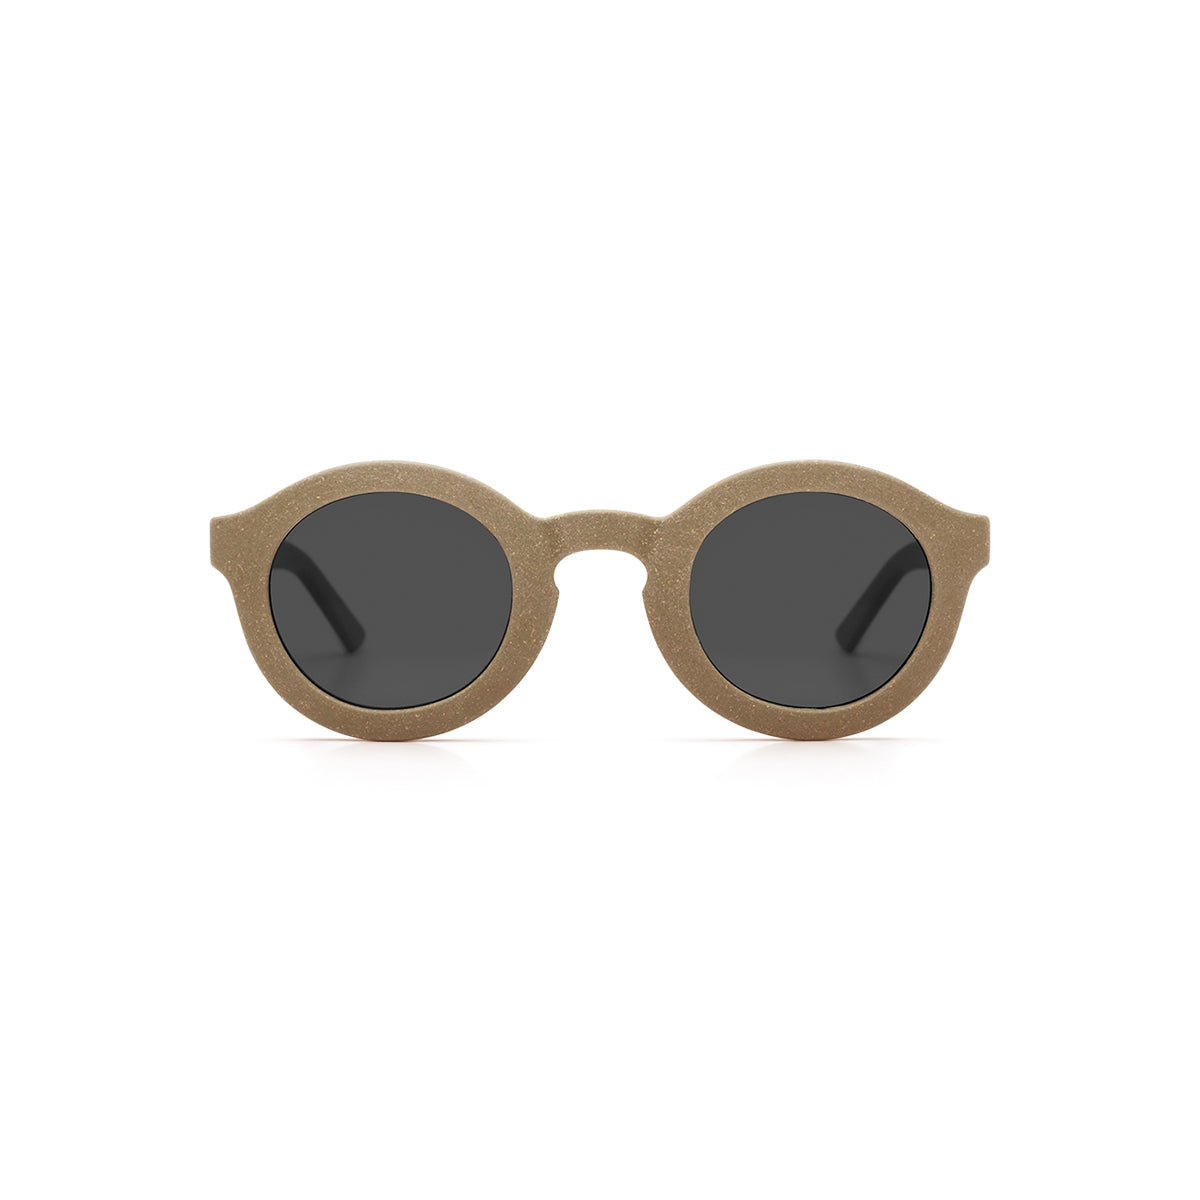  Kindersonnenbrille - Cream 01 | Peanut